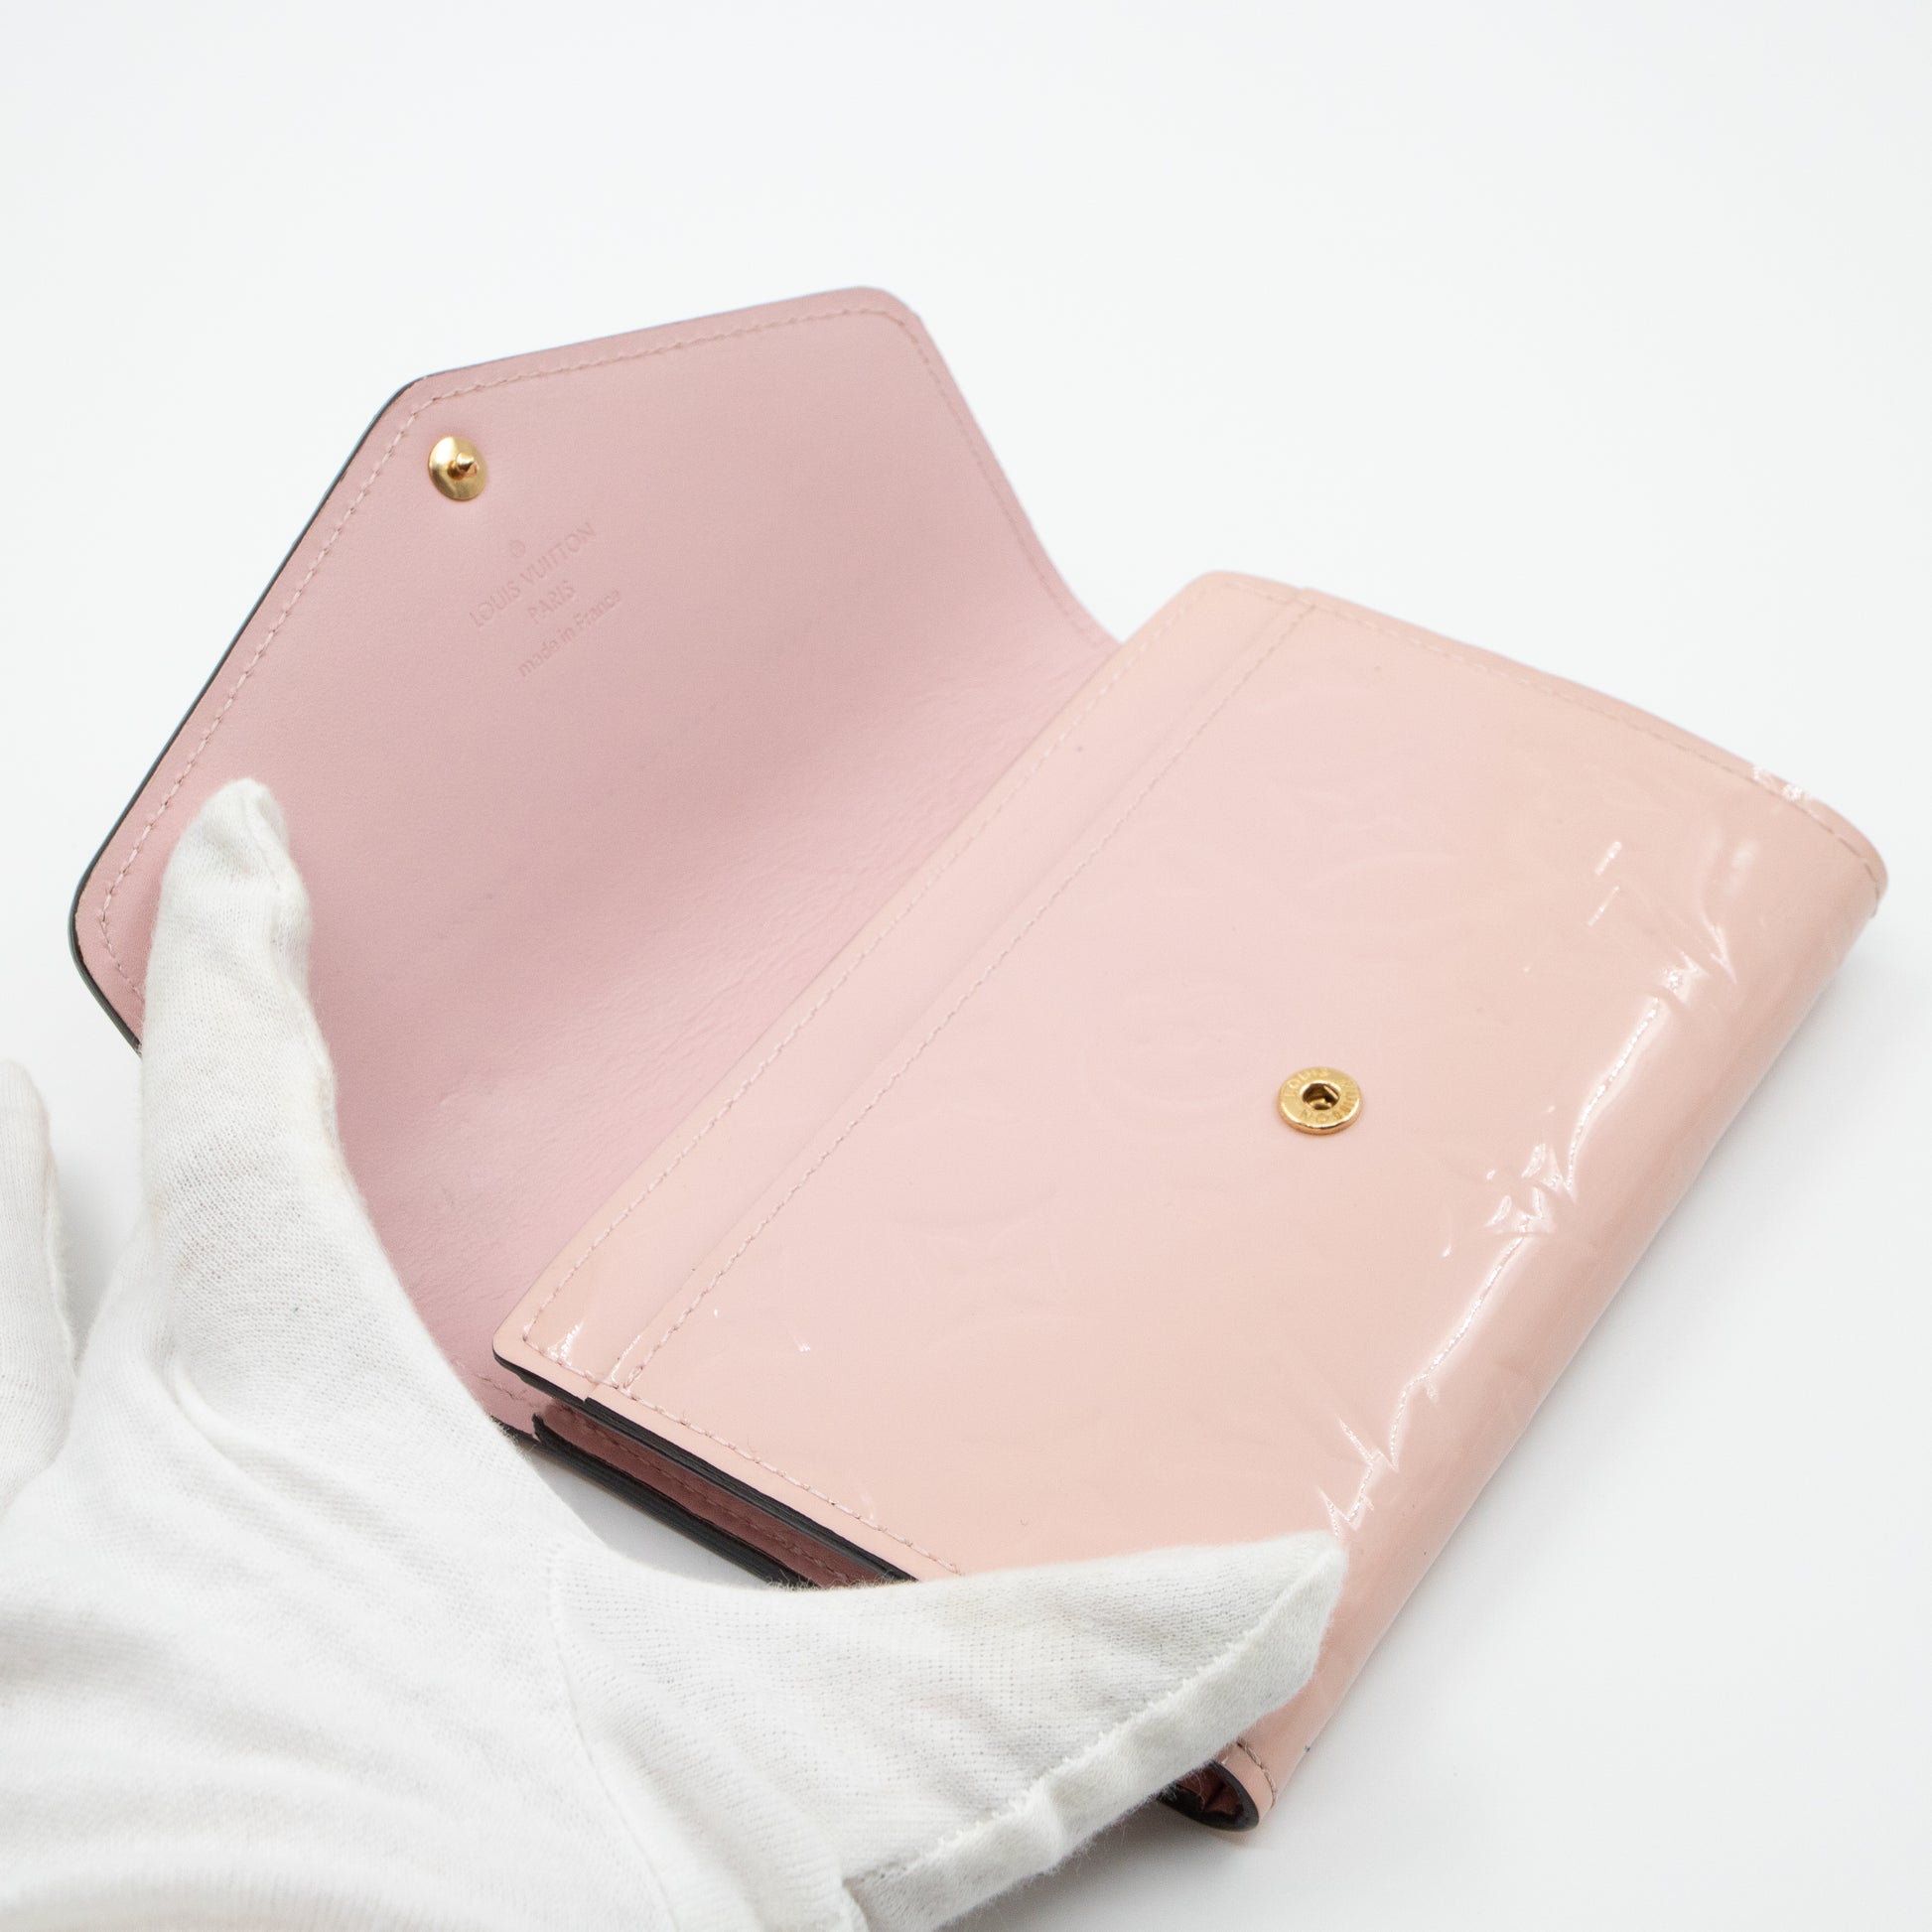 Louis Vuitton Wallet Pink Vernis Sarah compact wallet Rose Ballerine